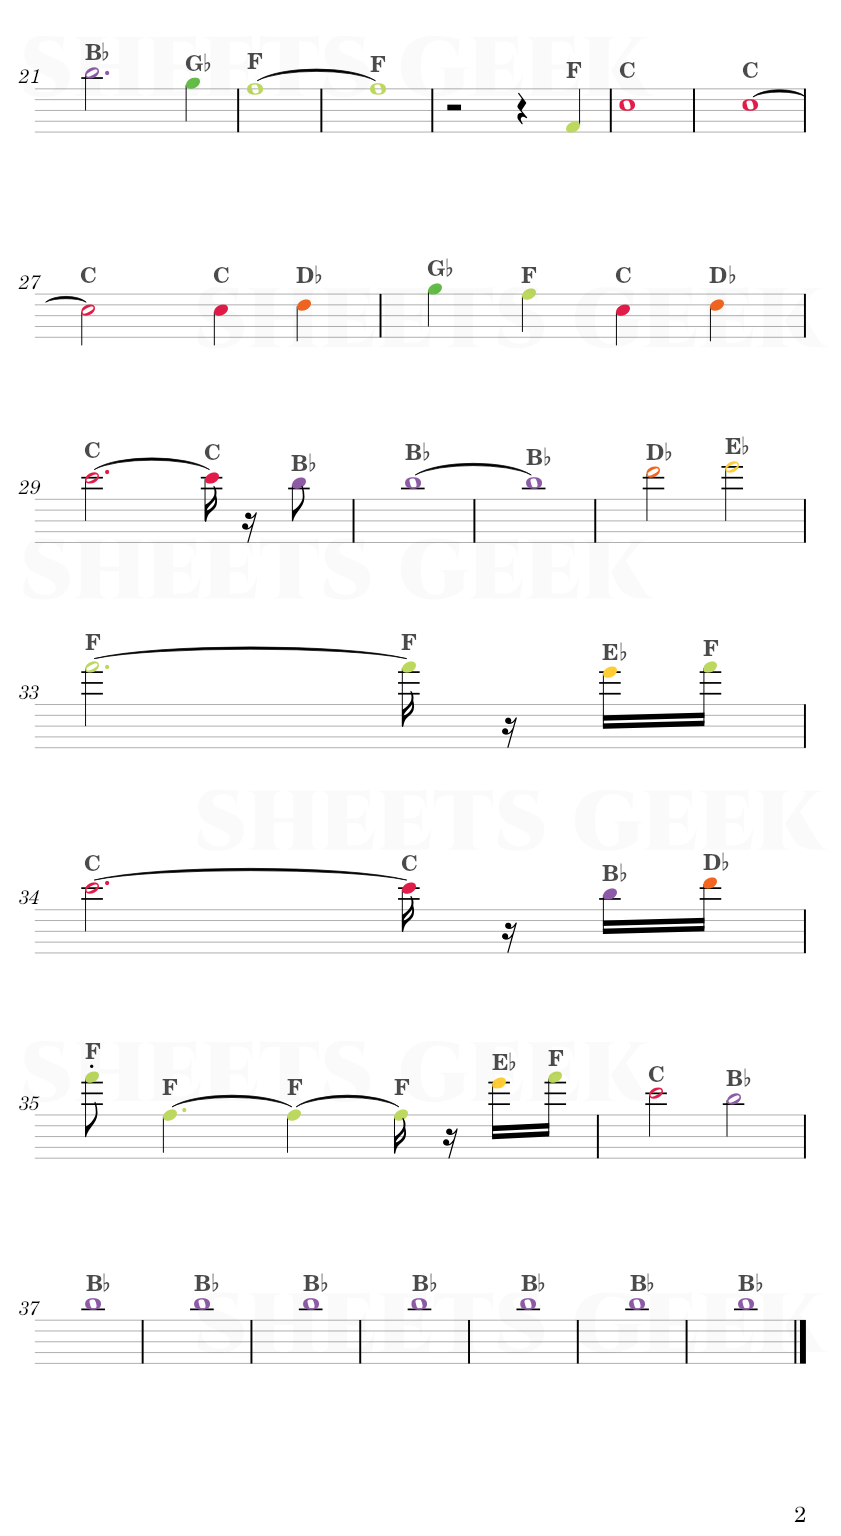 Raiden Shogun: Nightmare Teaser - Yu-Peng Chen baal's theme Easy Sheet Music Free for piano, keyboard, flute, violin, sax, cello page 2